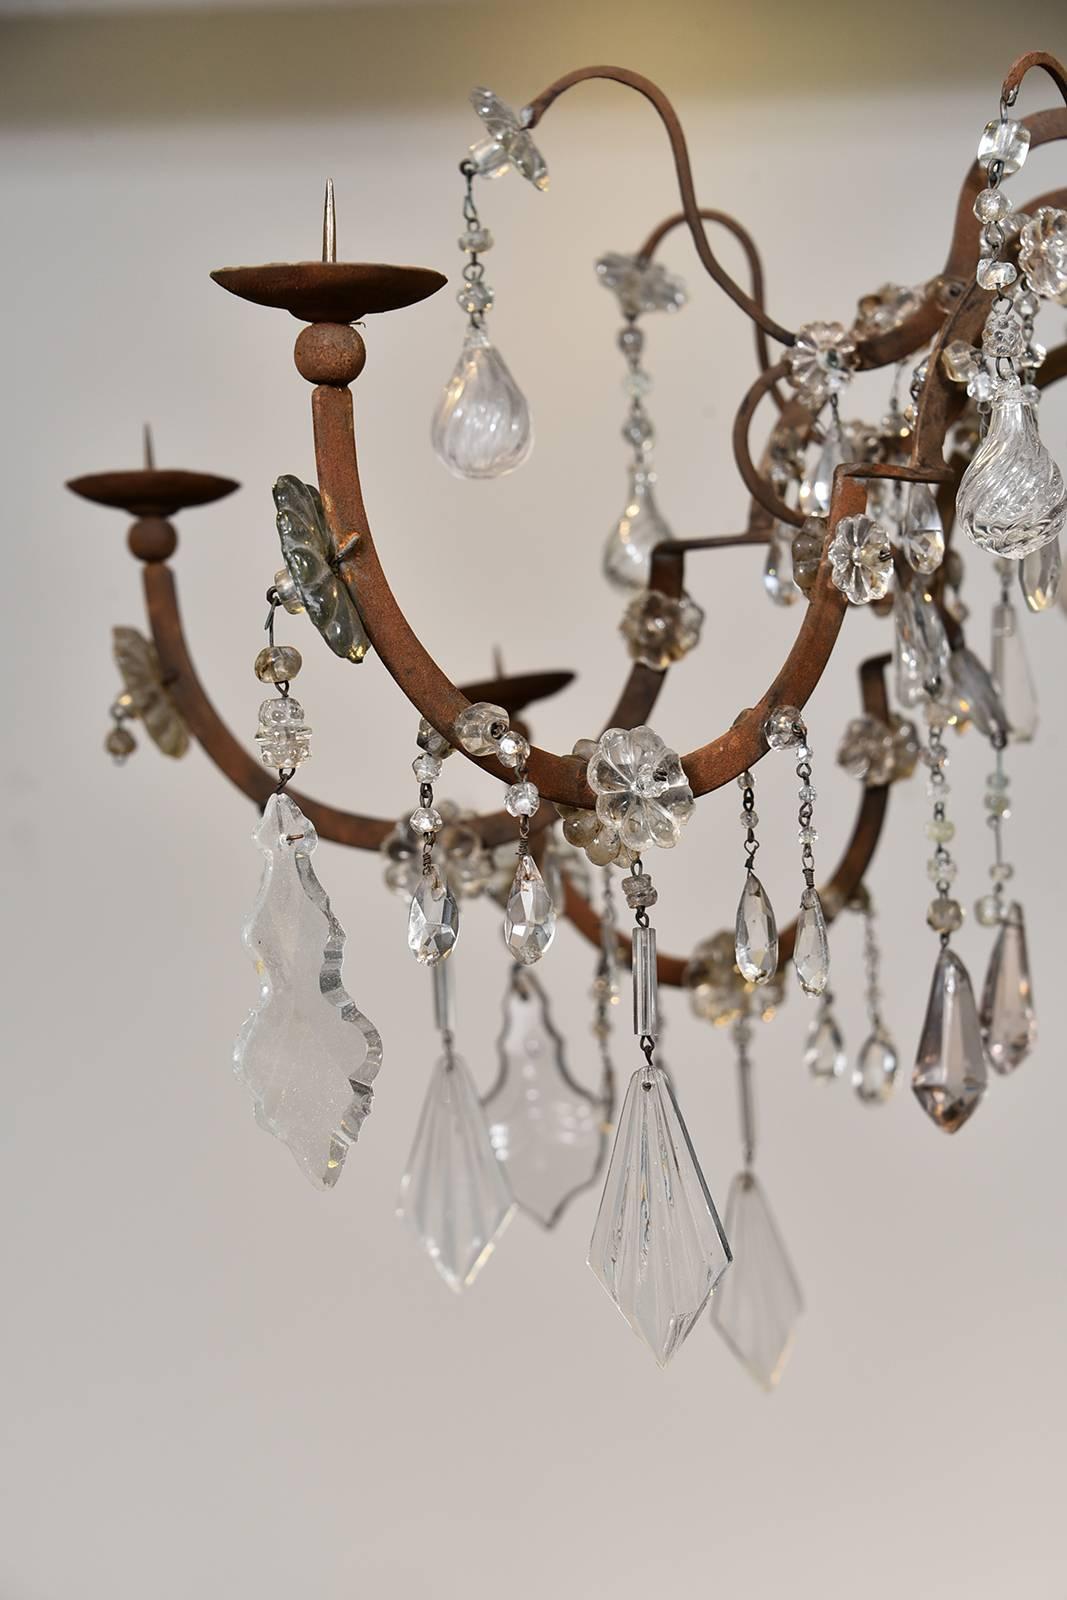 Elegant 19th century crystal and iron Italian Piedmontese chandelier.